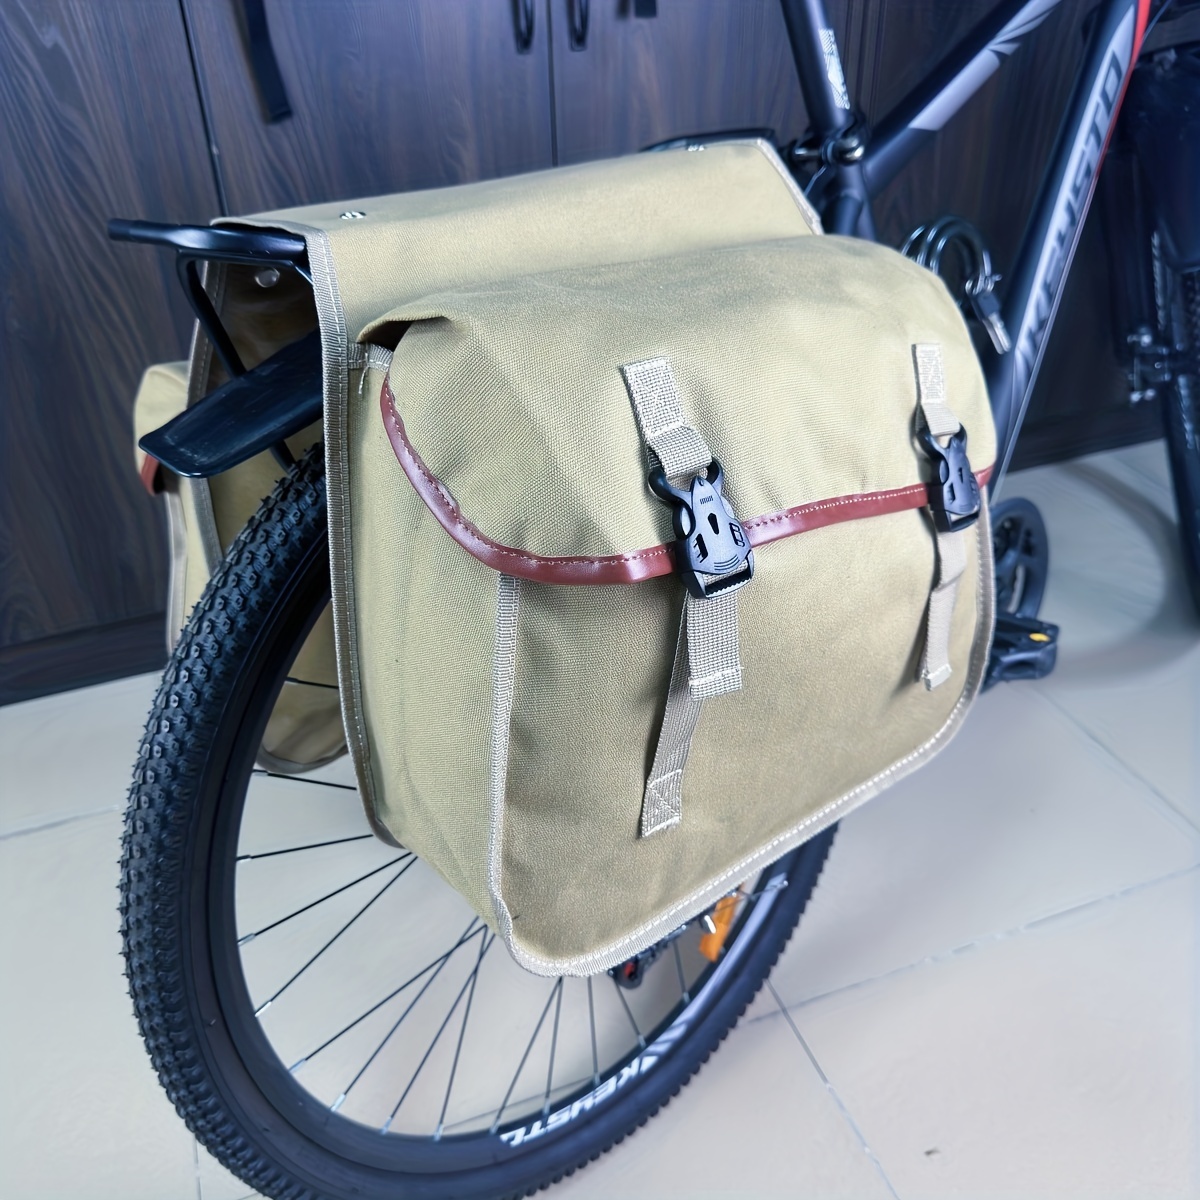 Bicycle Carrier Bag Bike Rack Bag Trunk Pannier Cycling Multifunctiona